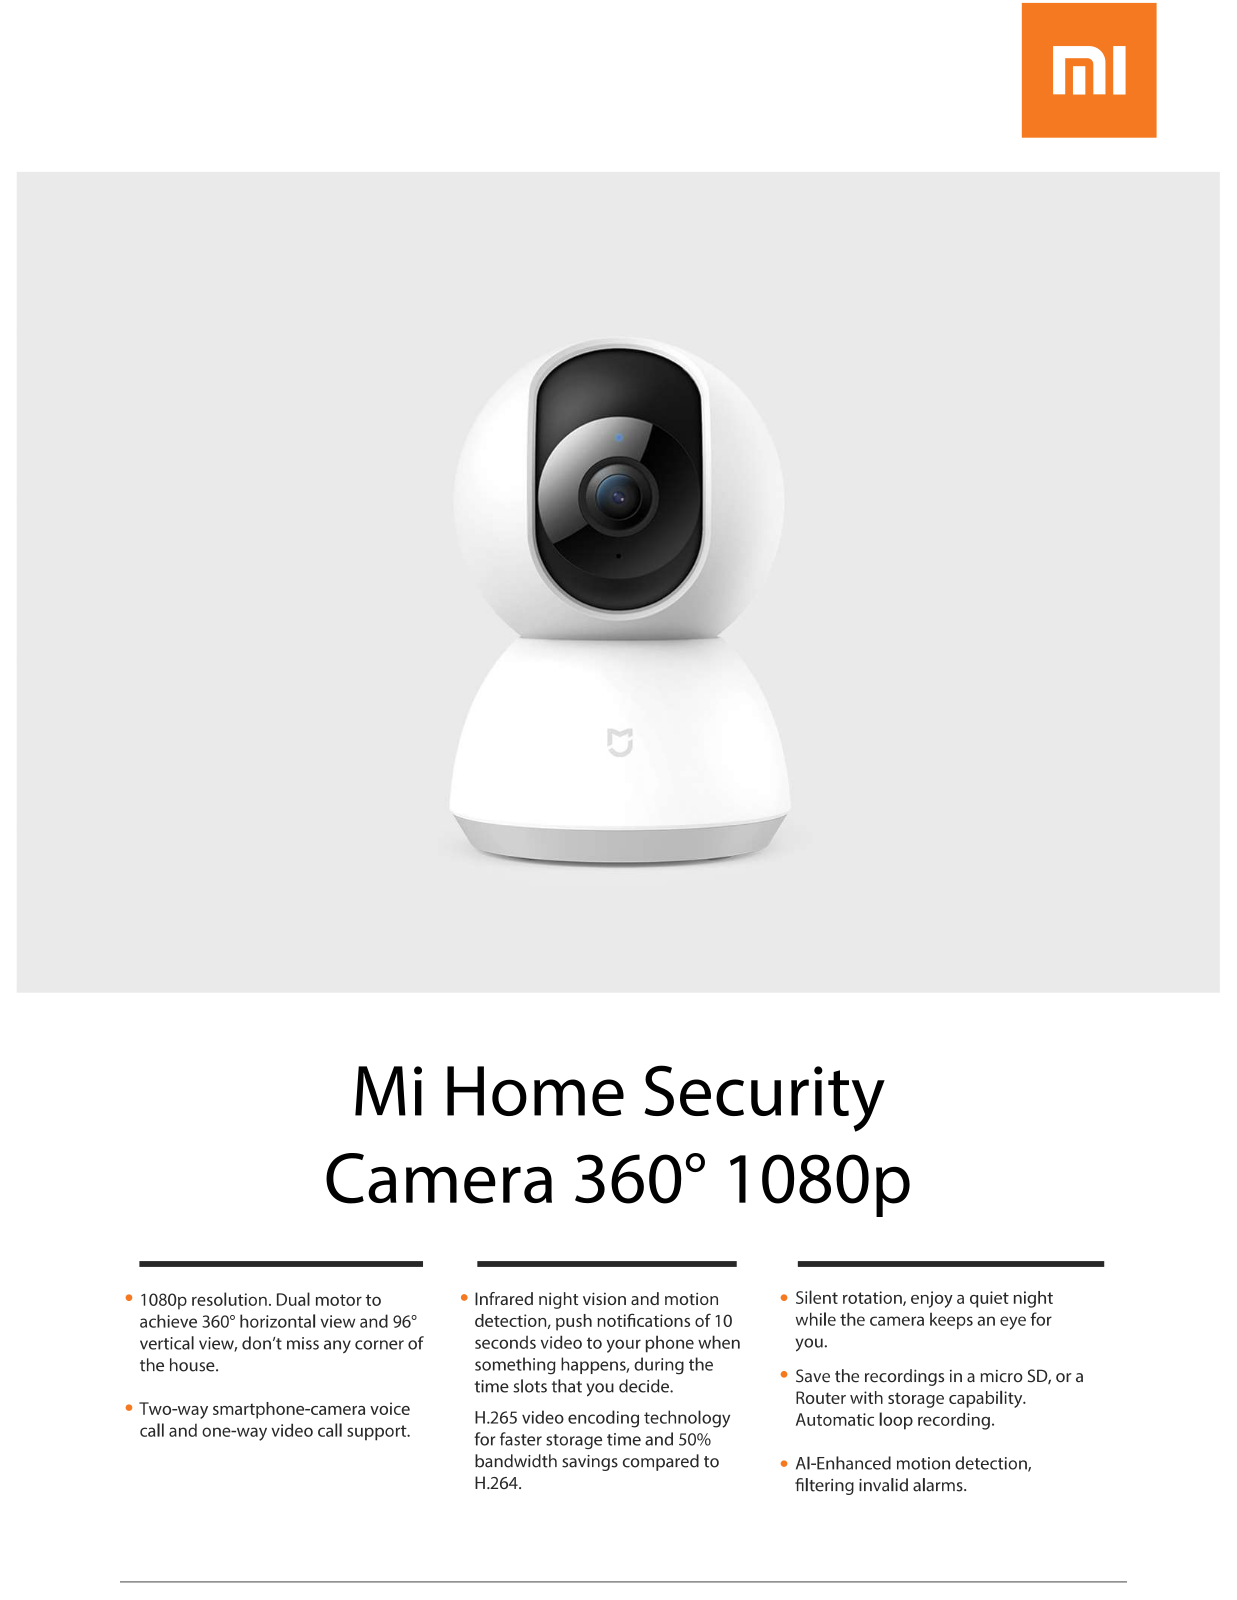 Xiaomi Mi Home Security Camera 360 User Manual